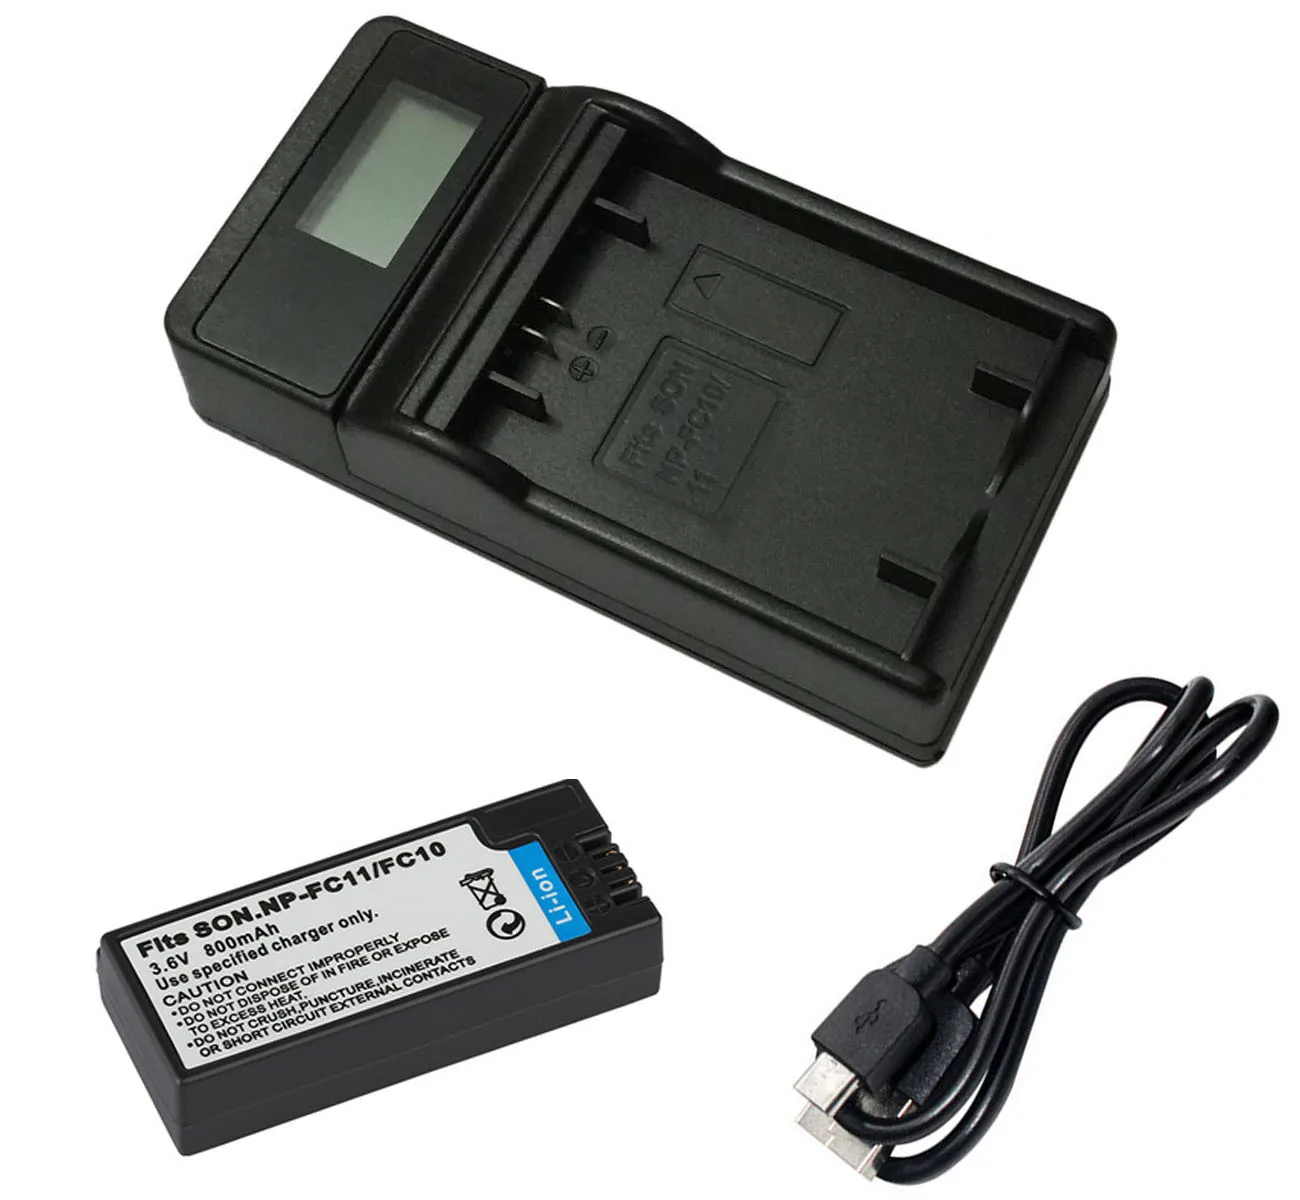 Батарея 2 шт. в комплекте+ Зарядное устройство для sony детали sony Cyber-Shot DSC-V1, DSC-P2, DSC-P3, DSC-P5, DSC-F77, DSC-F77A, DSC-F77E, DSC-FX77 цифровой Камера - Цвет: 1Battery and Charger